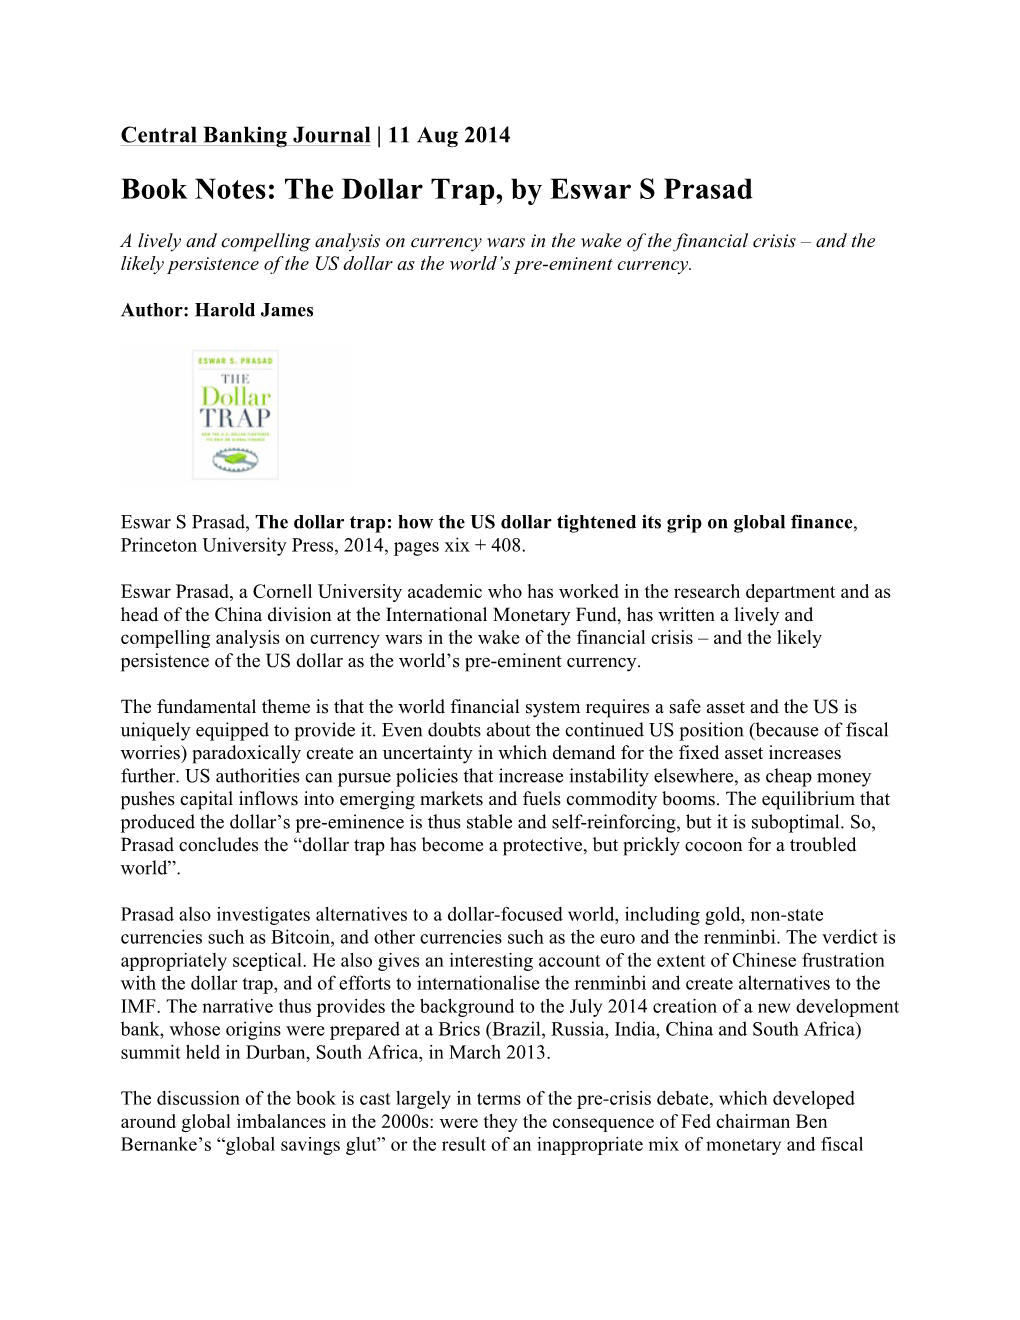 Book Notes: the Dollar Trap, by Eswar S Prasad